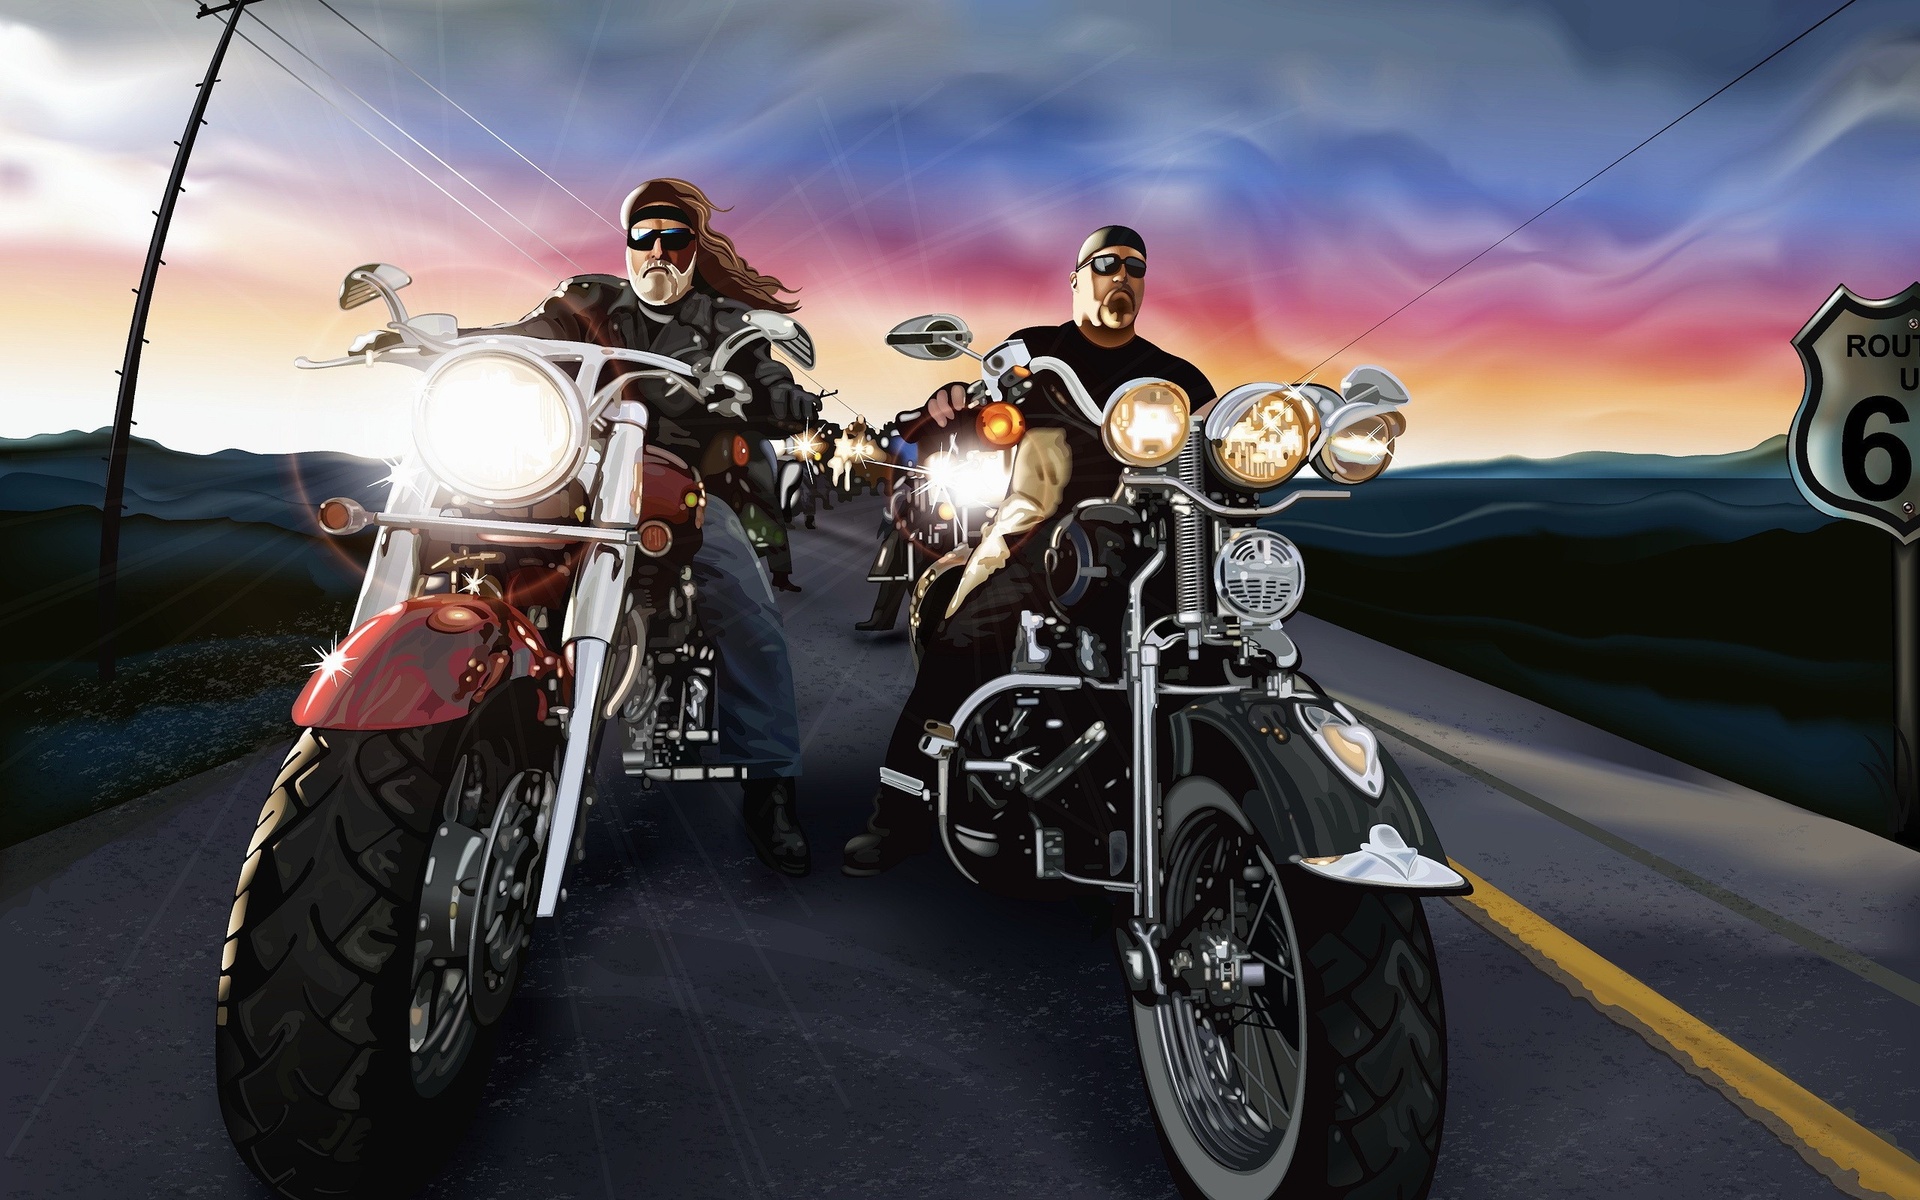 vehicles, Motorcycles, Motorbikes, Bikes, Lights, Biker, Roads, Hog, Harley, Sky, Clouds, Art, Artistic, Davidson, Route, 66 Wallpaper